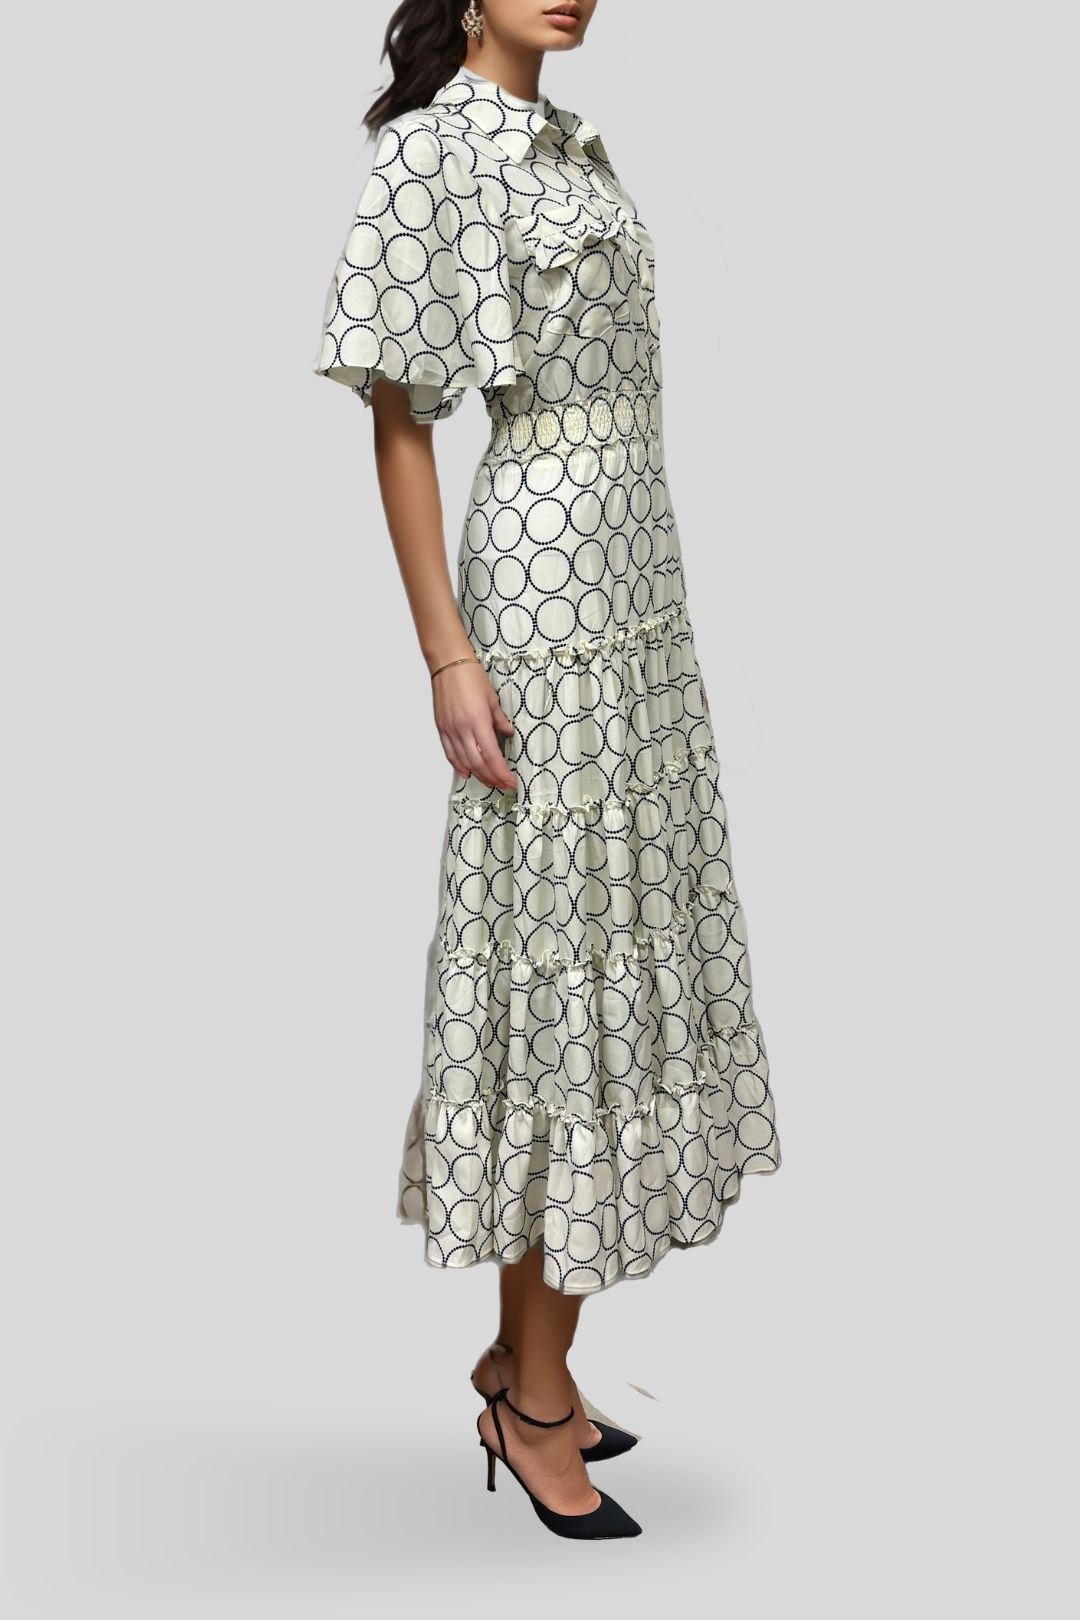 Brave & True - Lido Short Sleeve Dress - Ivory Circles